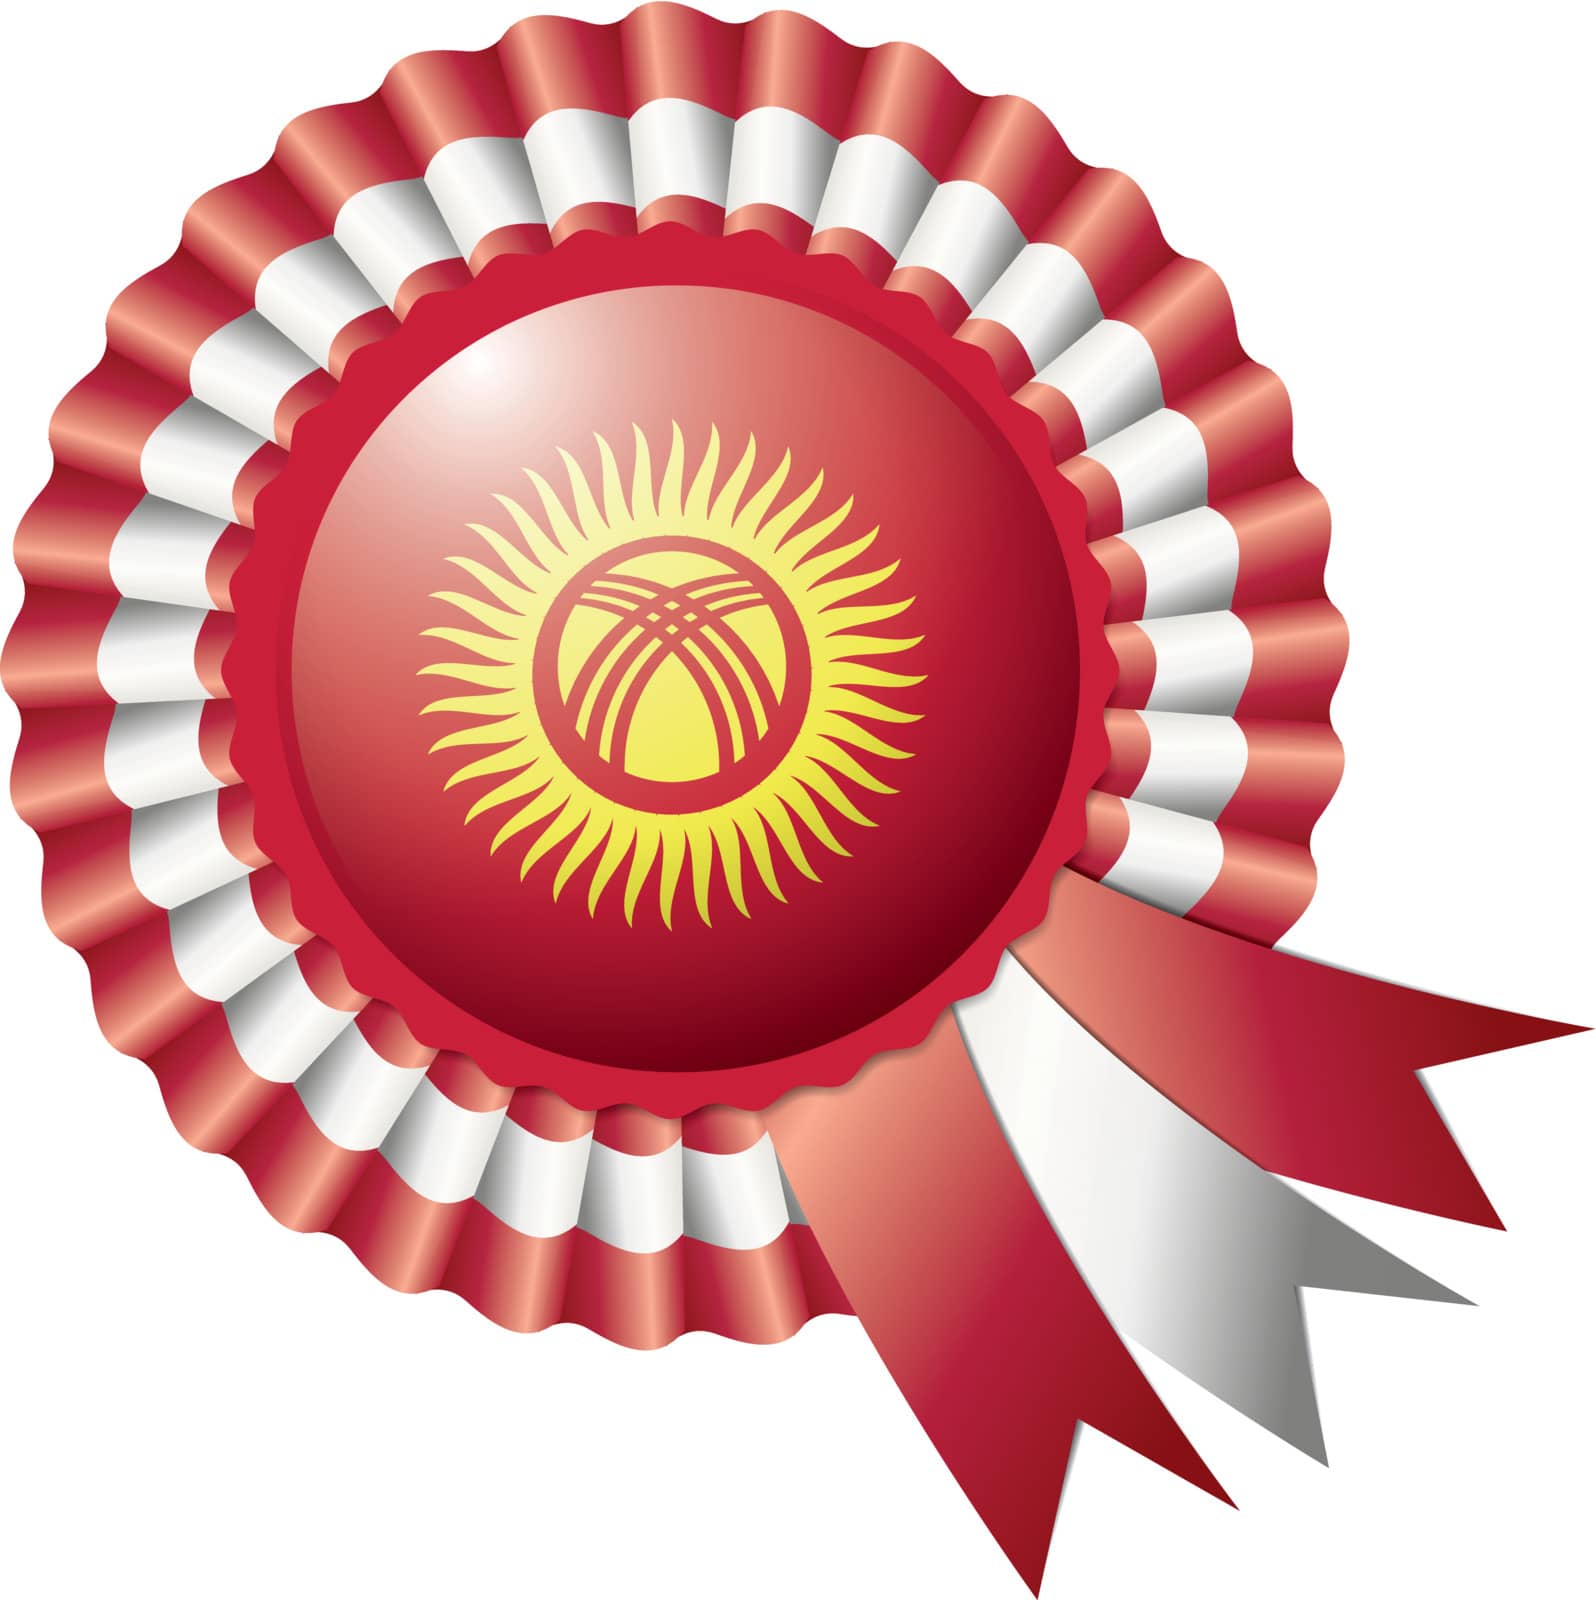 Kyrgyzstan rosette flag by milinz